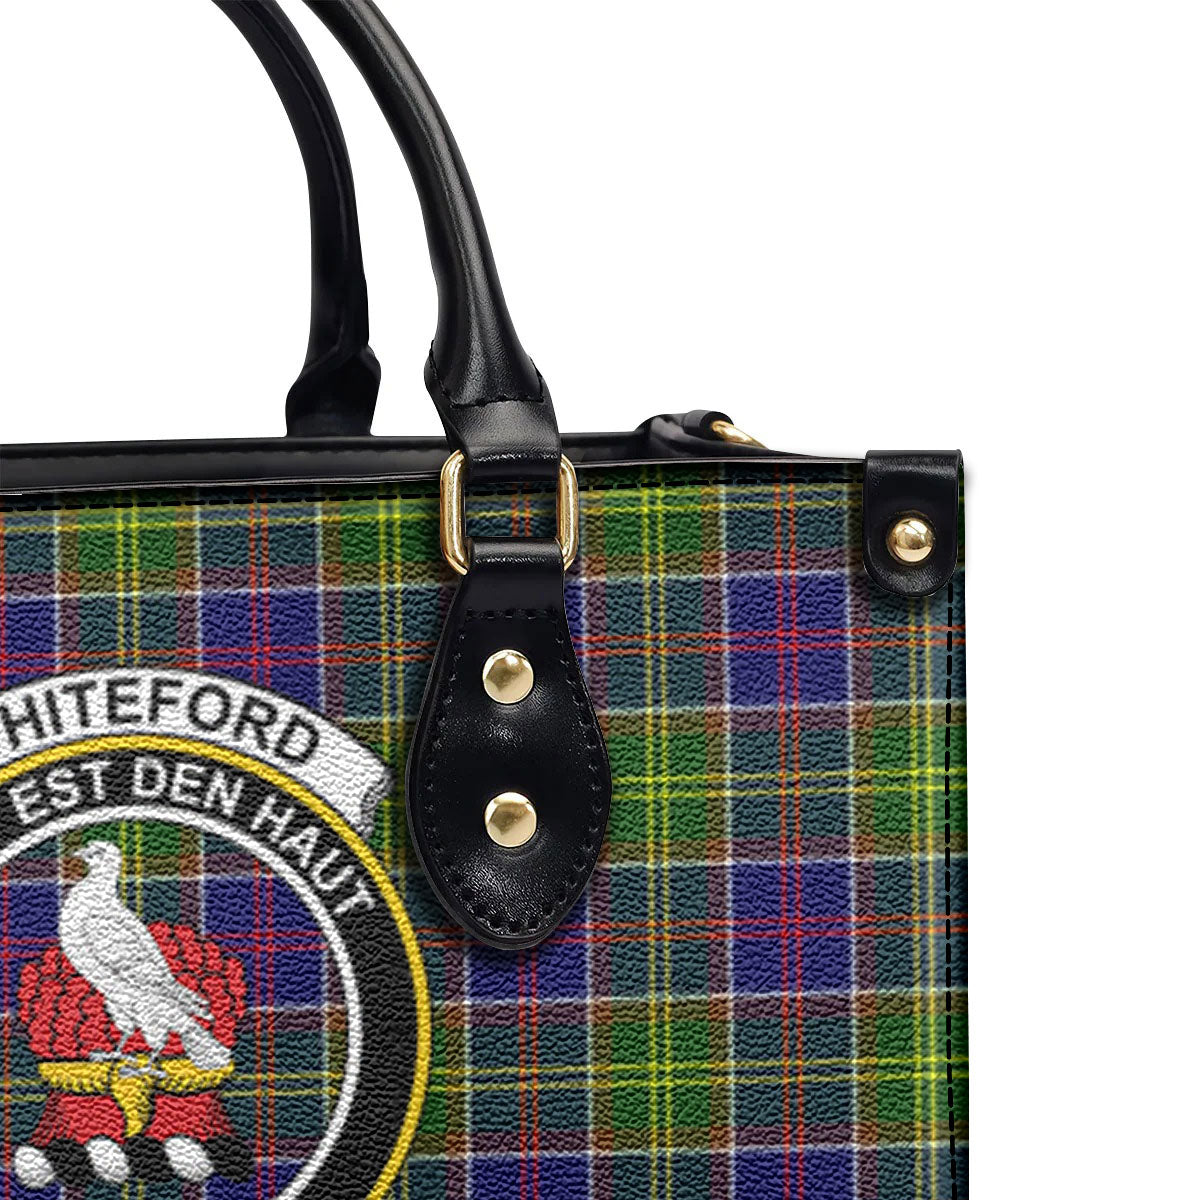 Whiteford Tartan Crest Leather Handbag